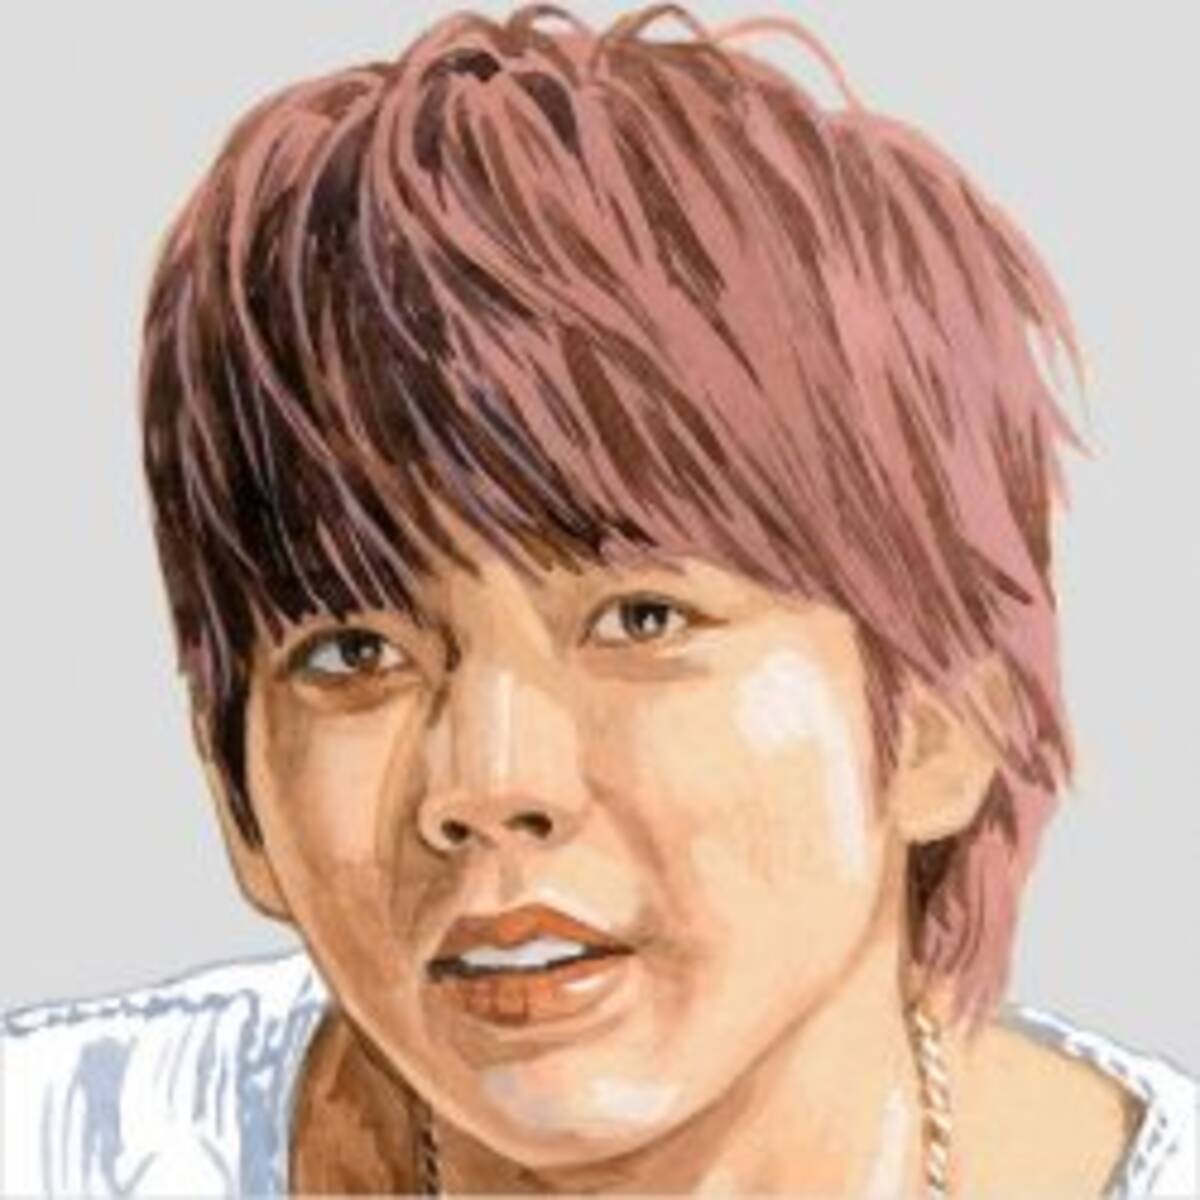 News増田貴久か 先行動画 で ゴチ 新メンバーに流れる憶測 年1月15日 エキサイトニュース